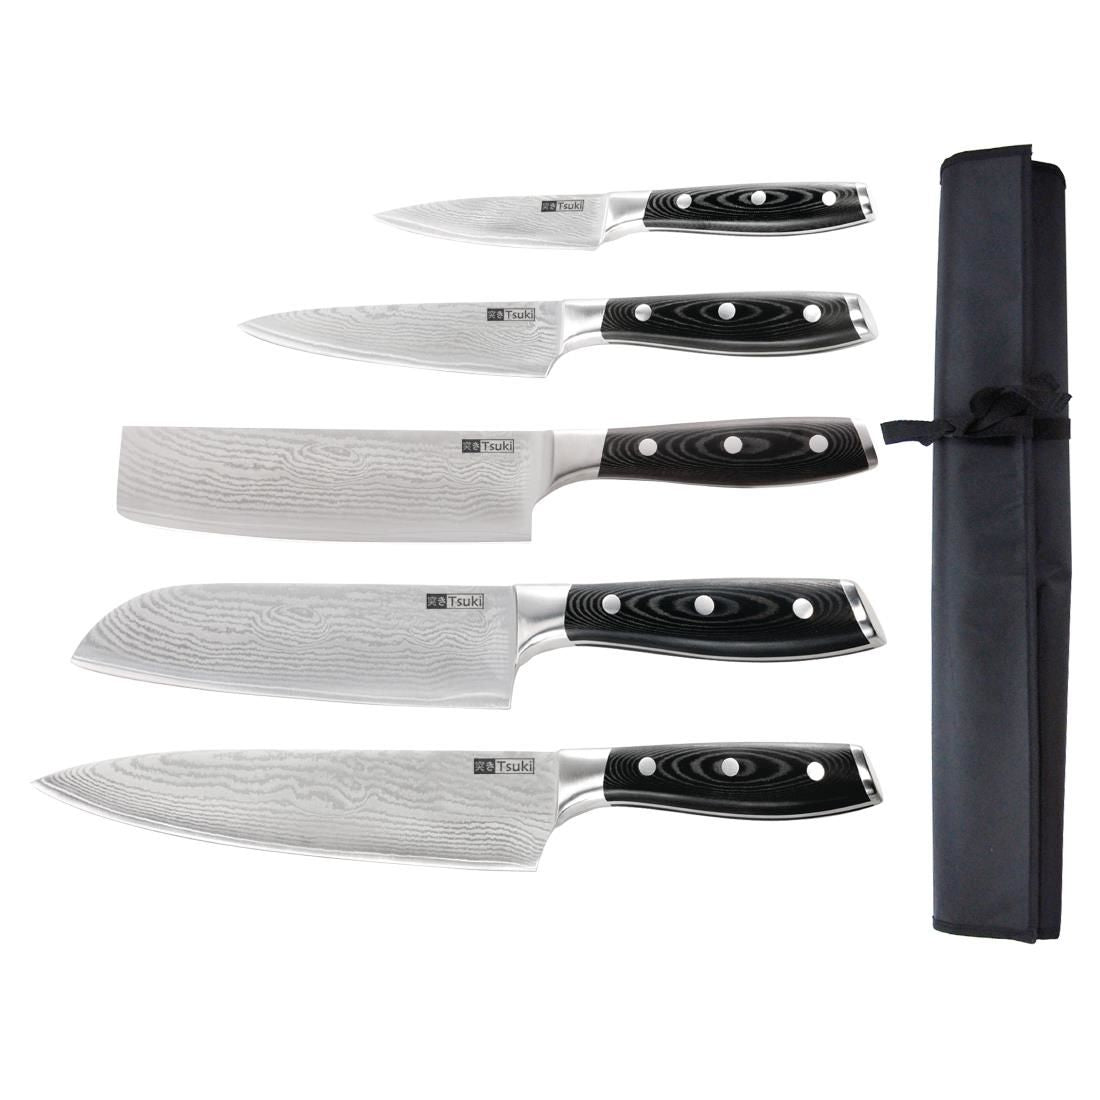 S617 Tsuki 5 Piece Series 7 Knife Set and Wallet